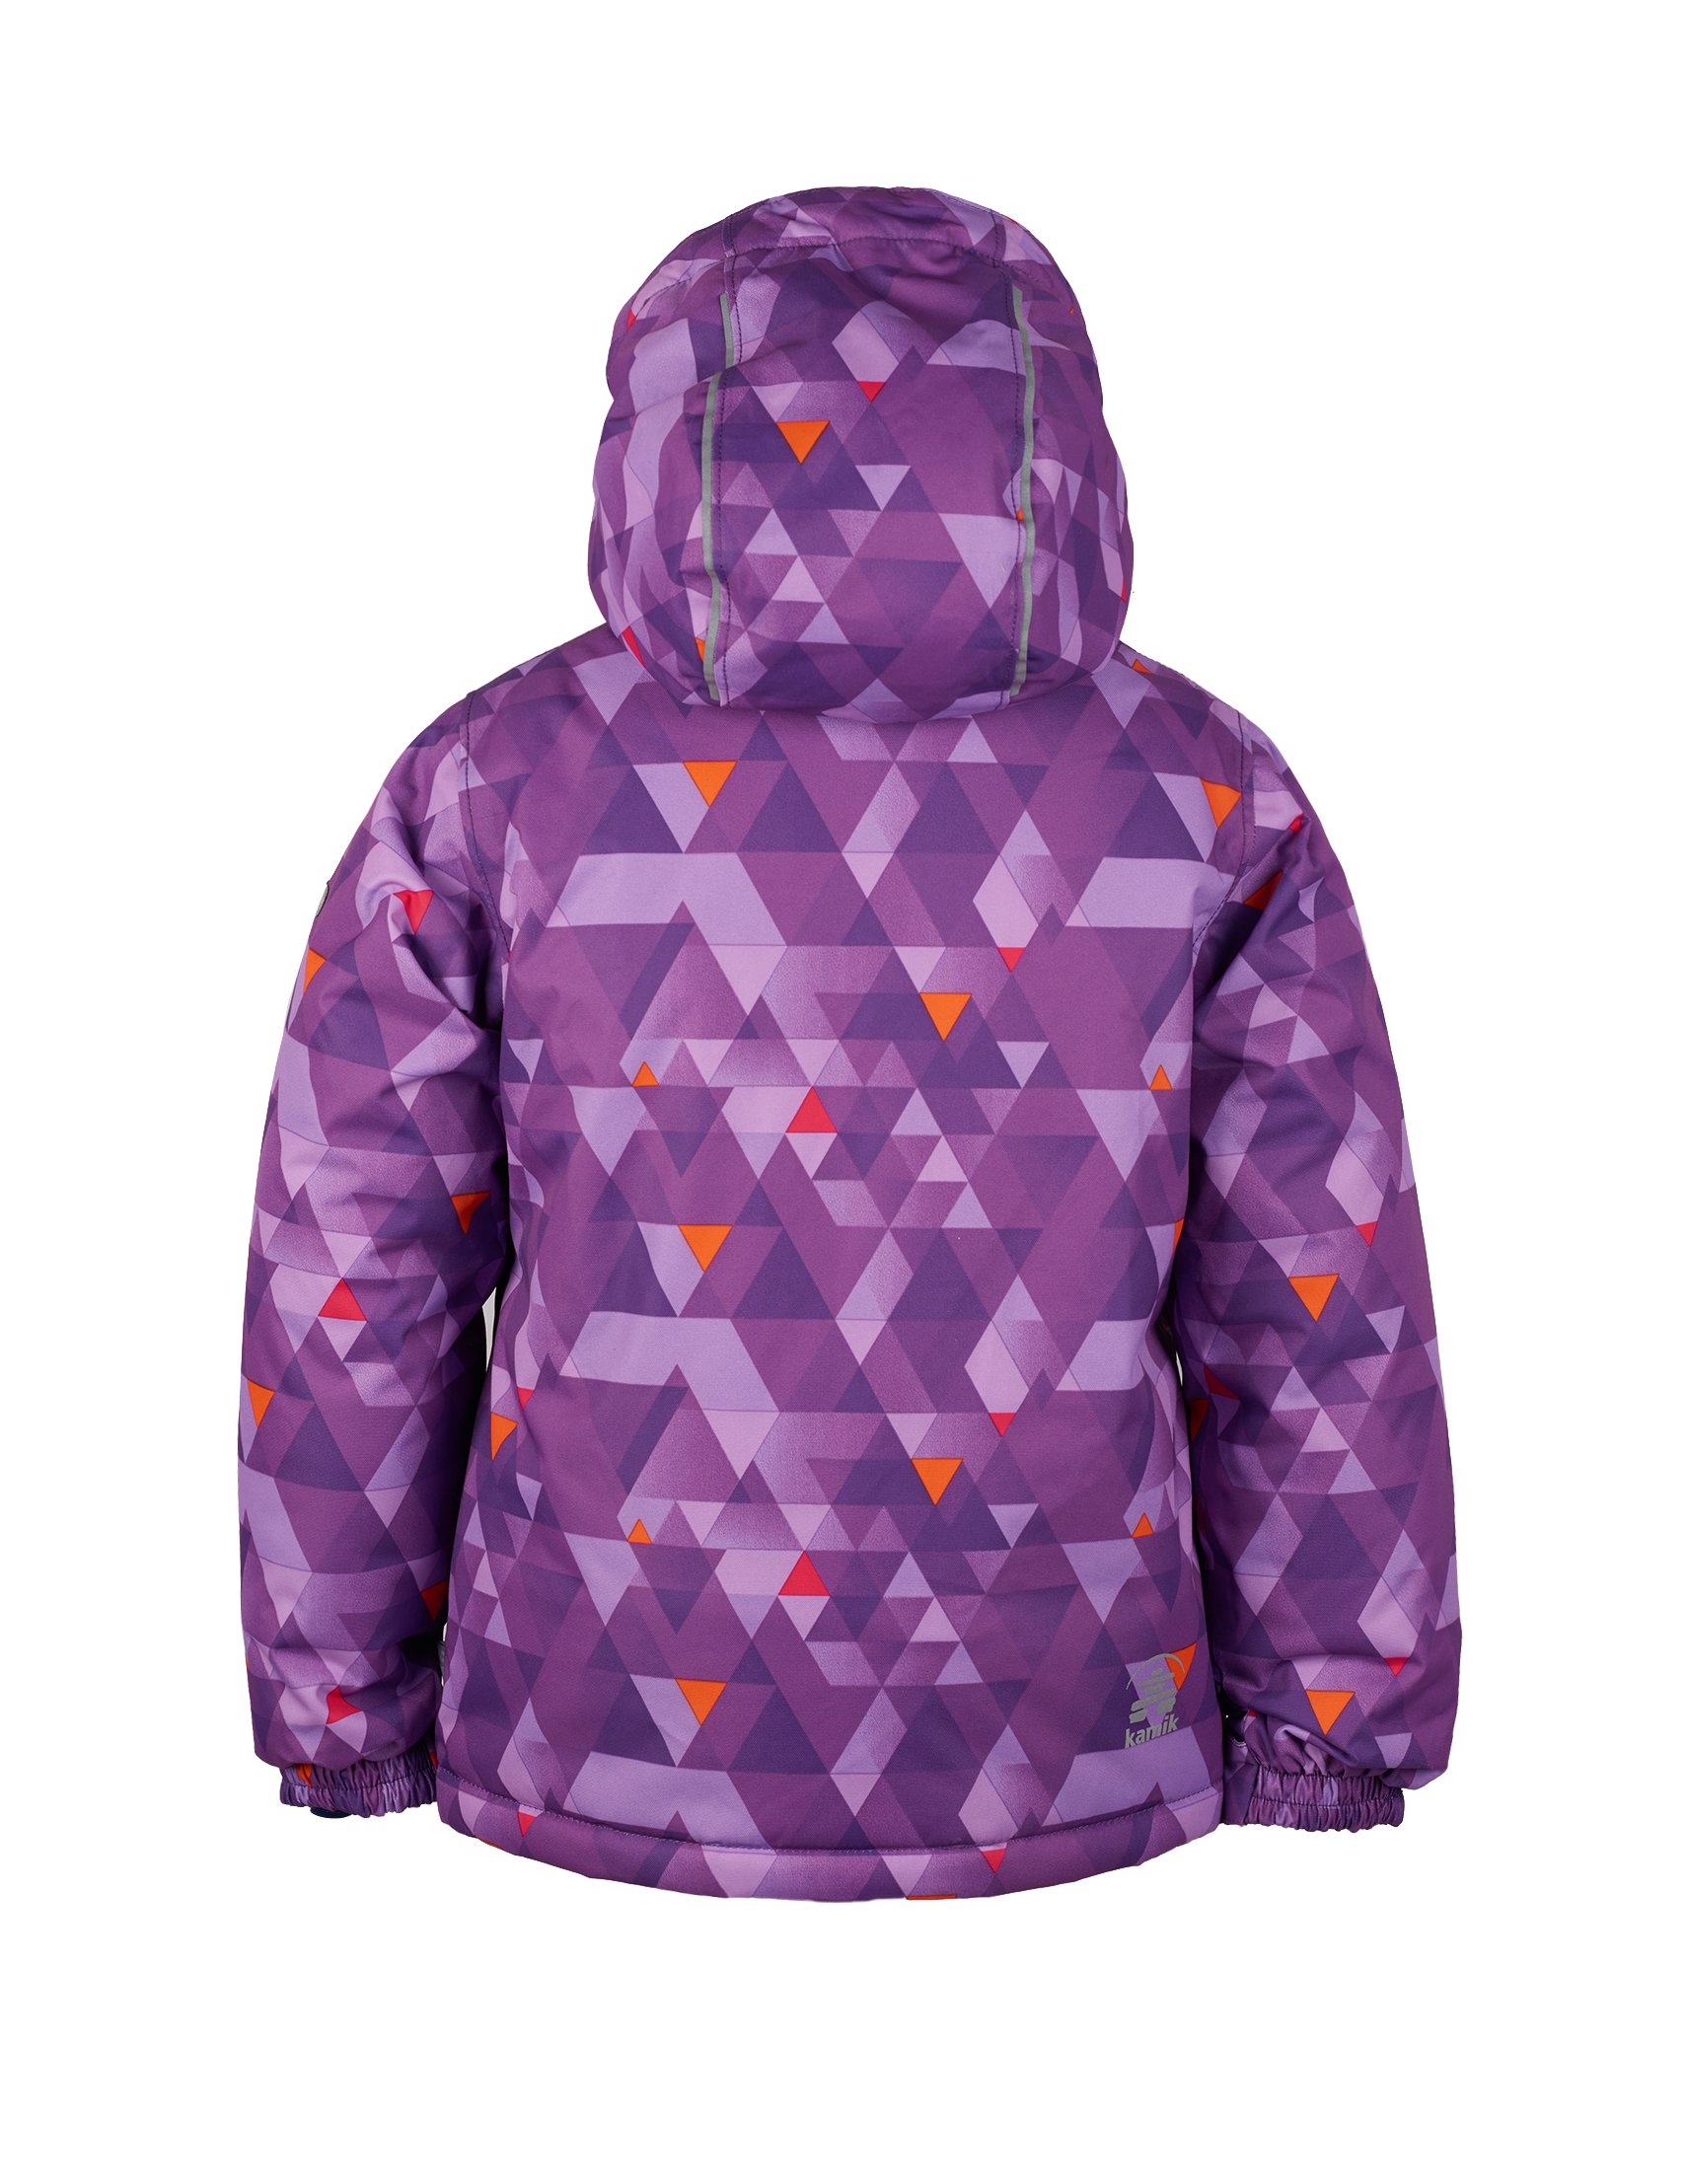 Куртка горнолыжная Kamik Aria Freefall Grape/Orange, цвет фиолетовый, размер 140 см KWG6617 - фото 3